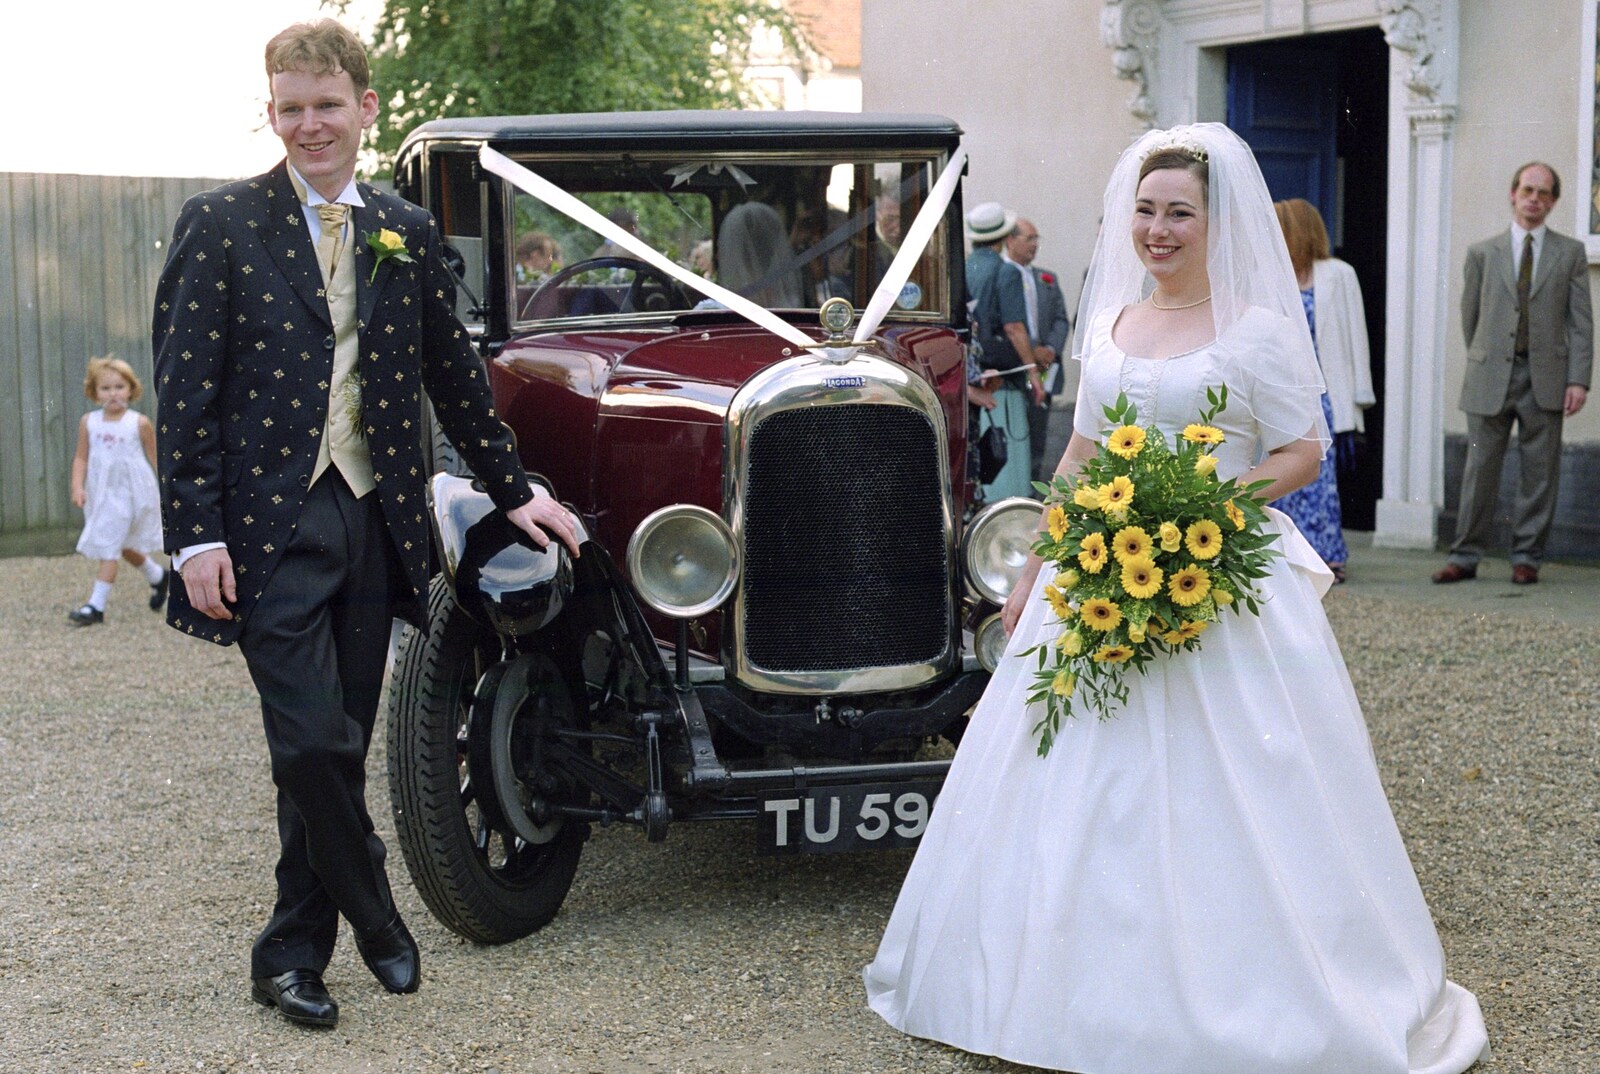 Joe, Lesley and the car from Joe and Lesley's CISU Wedding, Ipswich, Suffolk - 30th July 1998